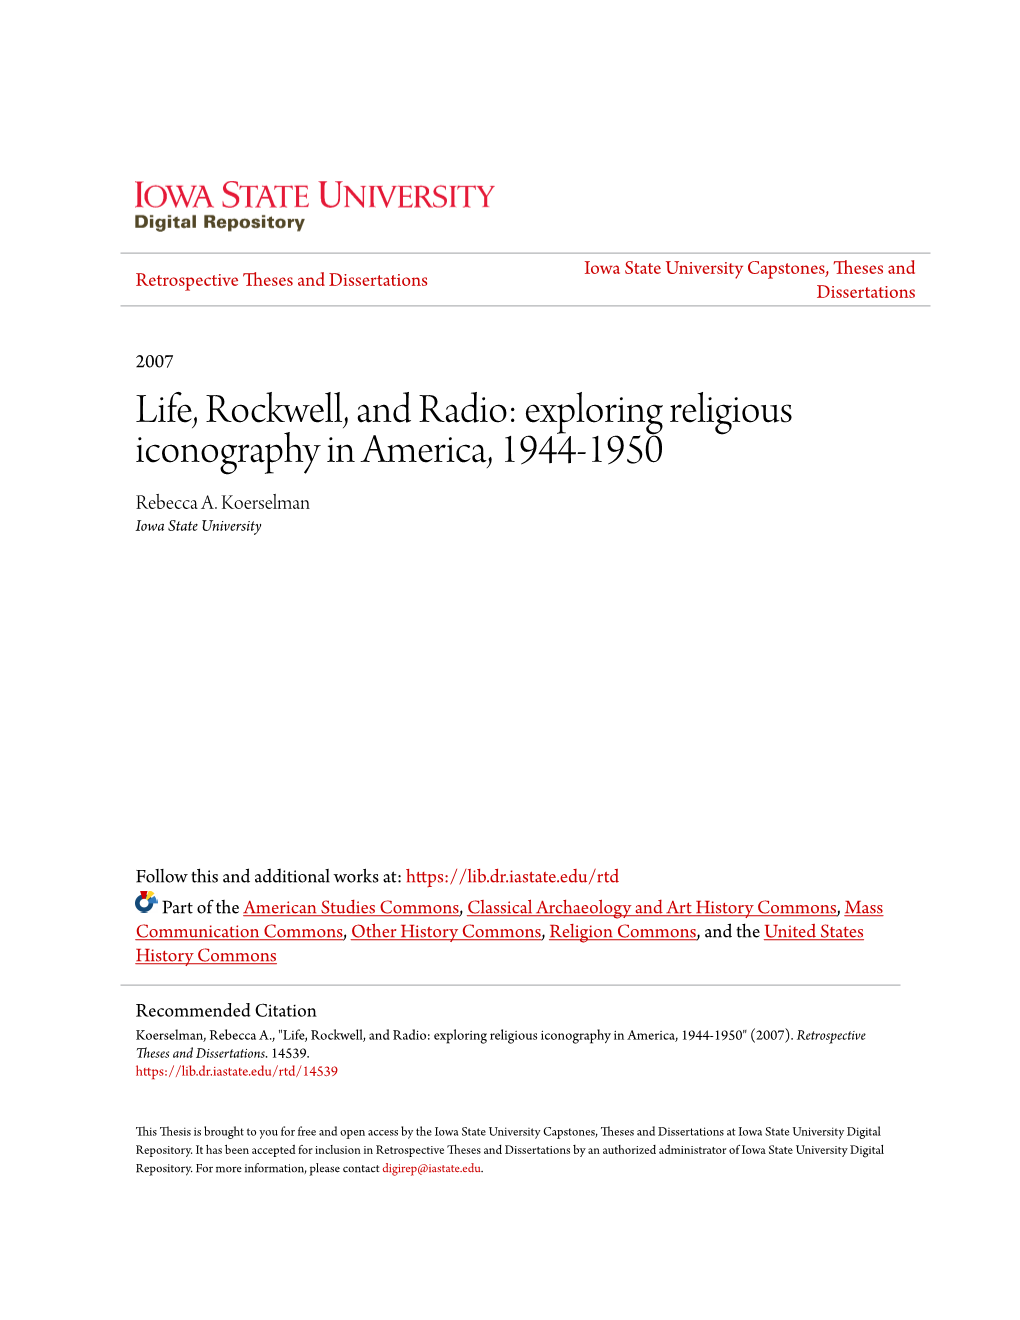 Exploring Religious Iconography in America, 1944-1950 Rebecca A